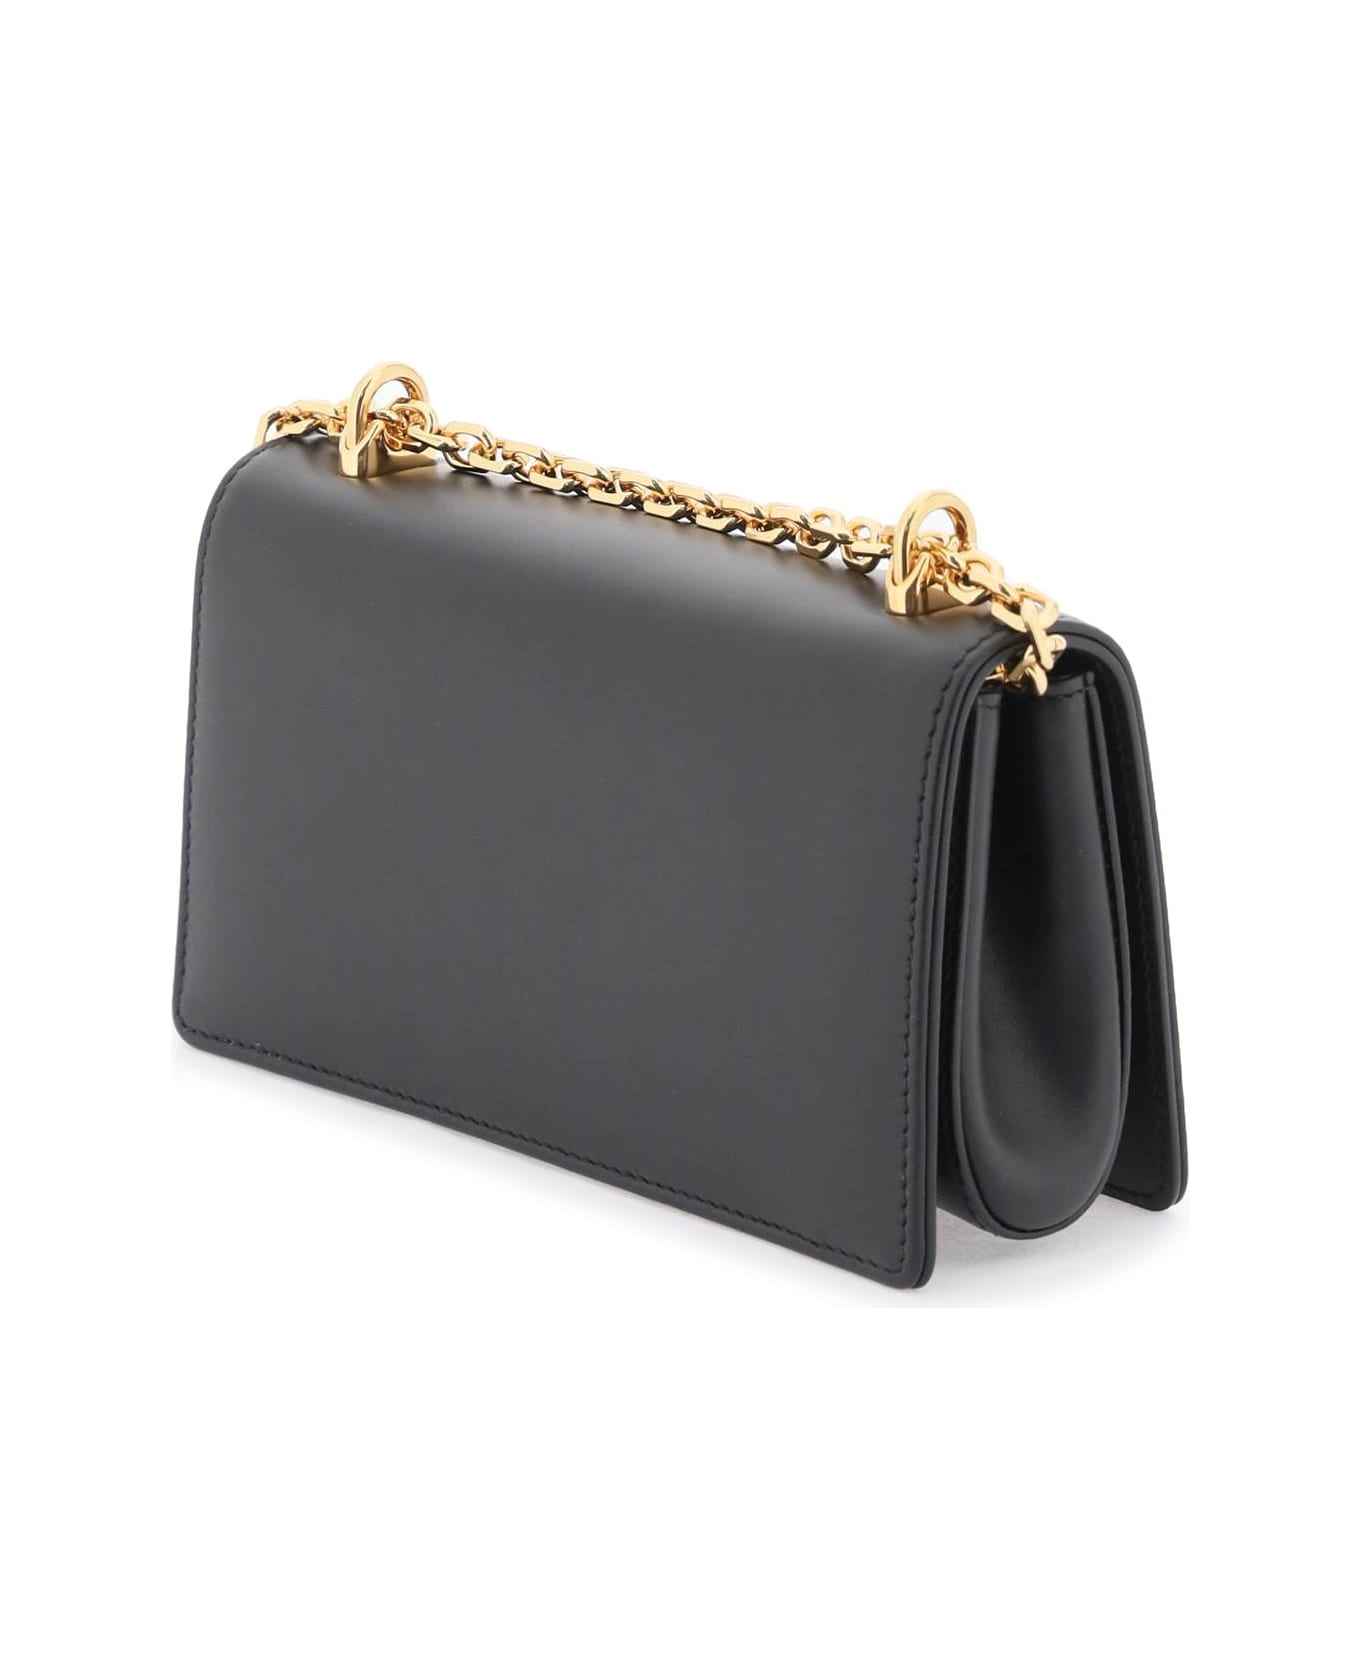 Dolce & Gabbana Dg Girls Phone Bag - NERO (Black)